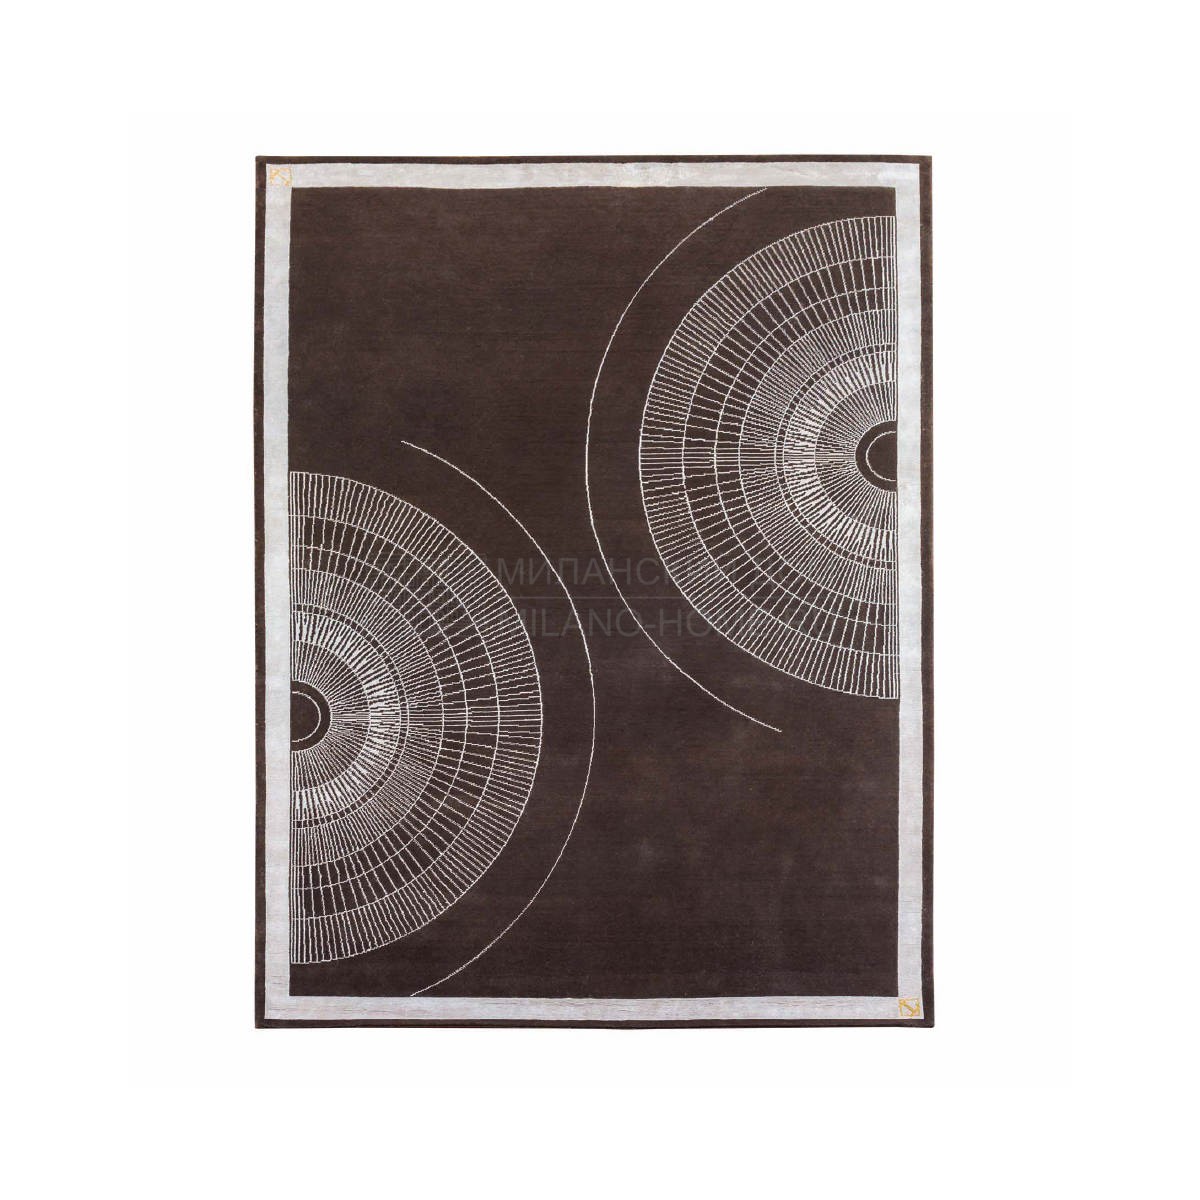 Ковер Noir circles carpet из Италии фабрики TURRI